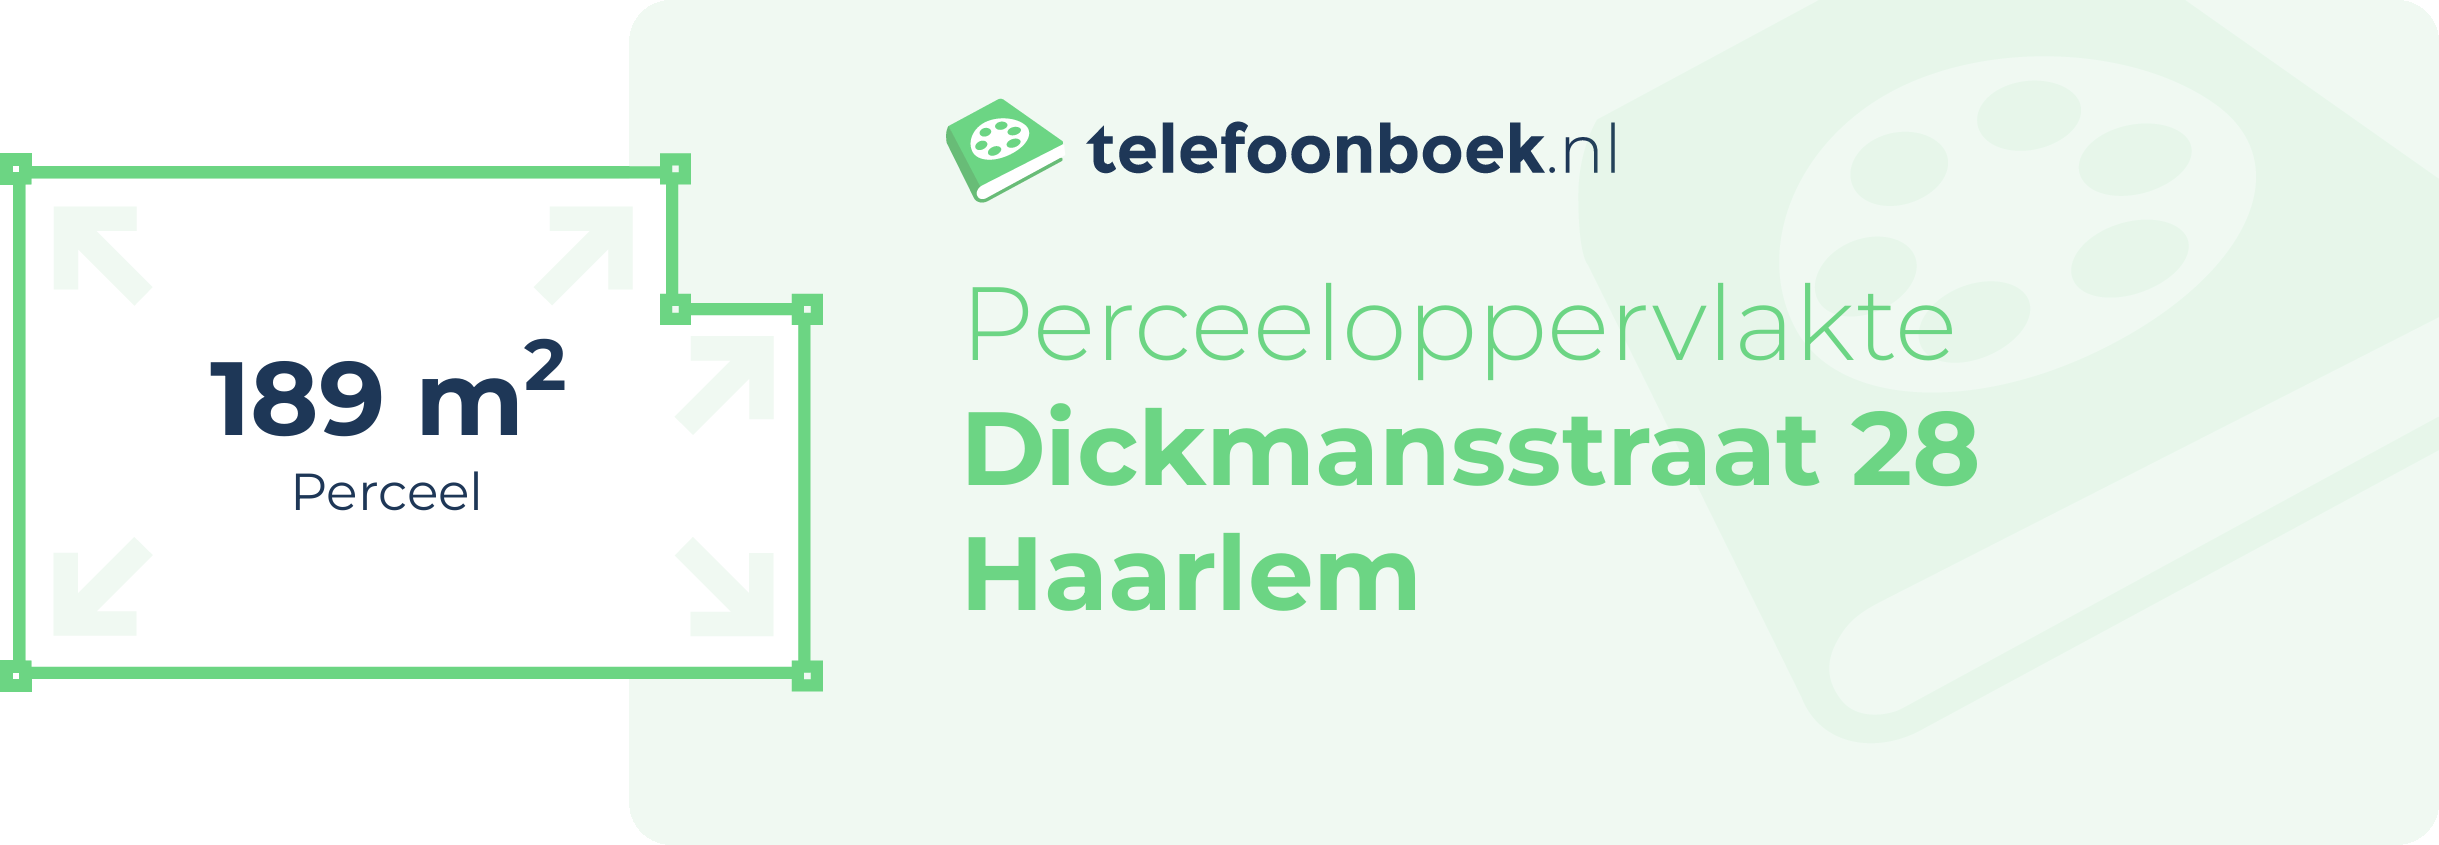 Perceeloppervlakte Dickmansstraat 28 Haarlem